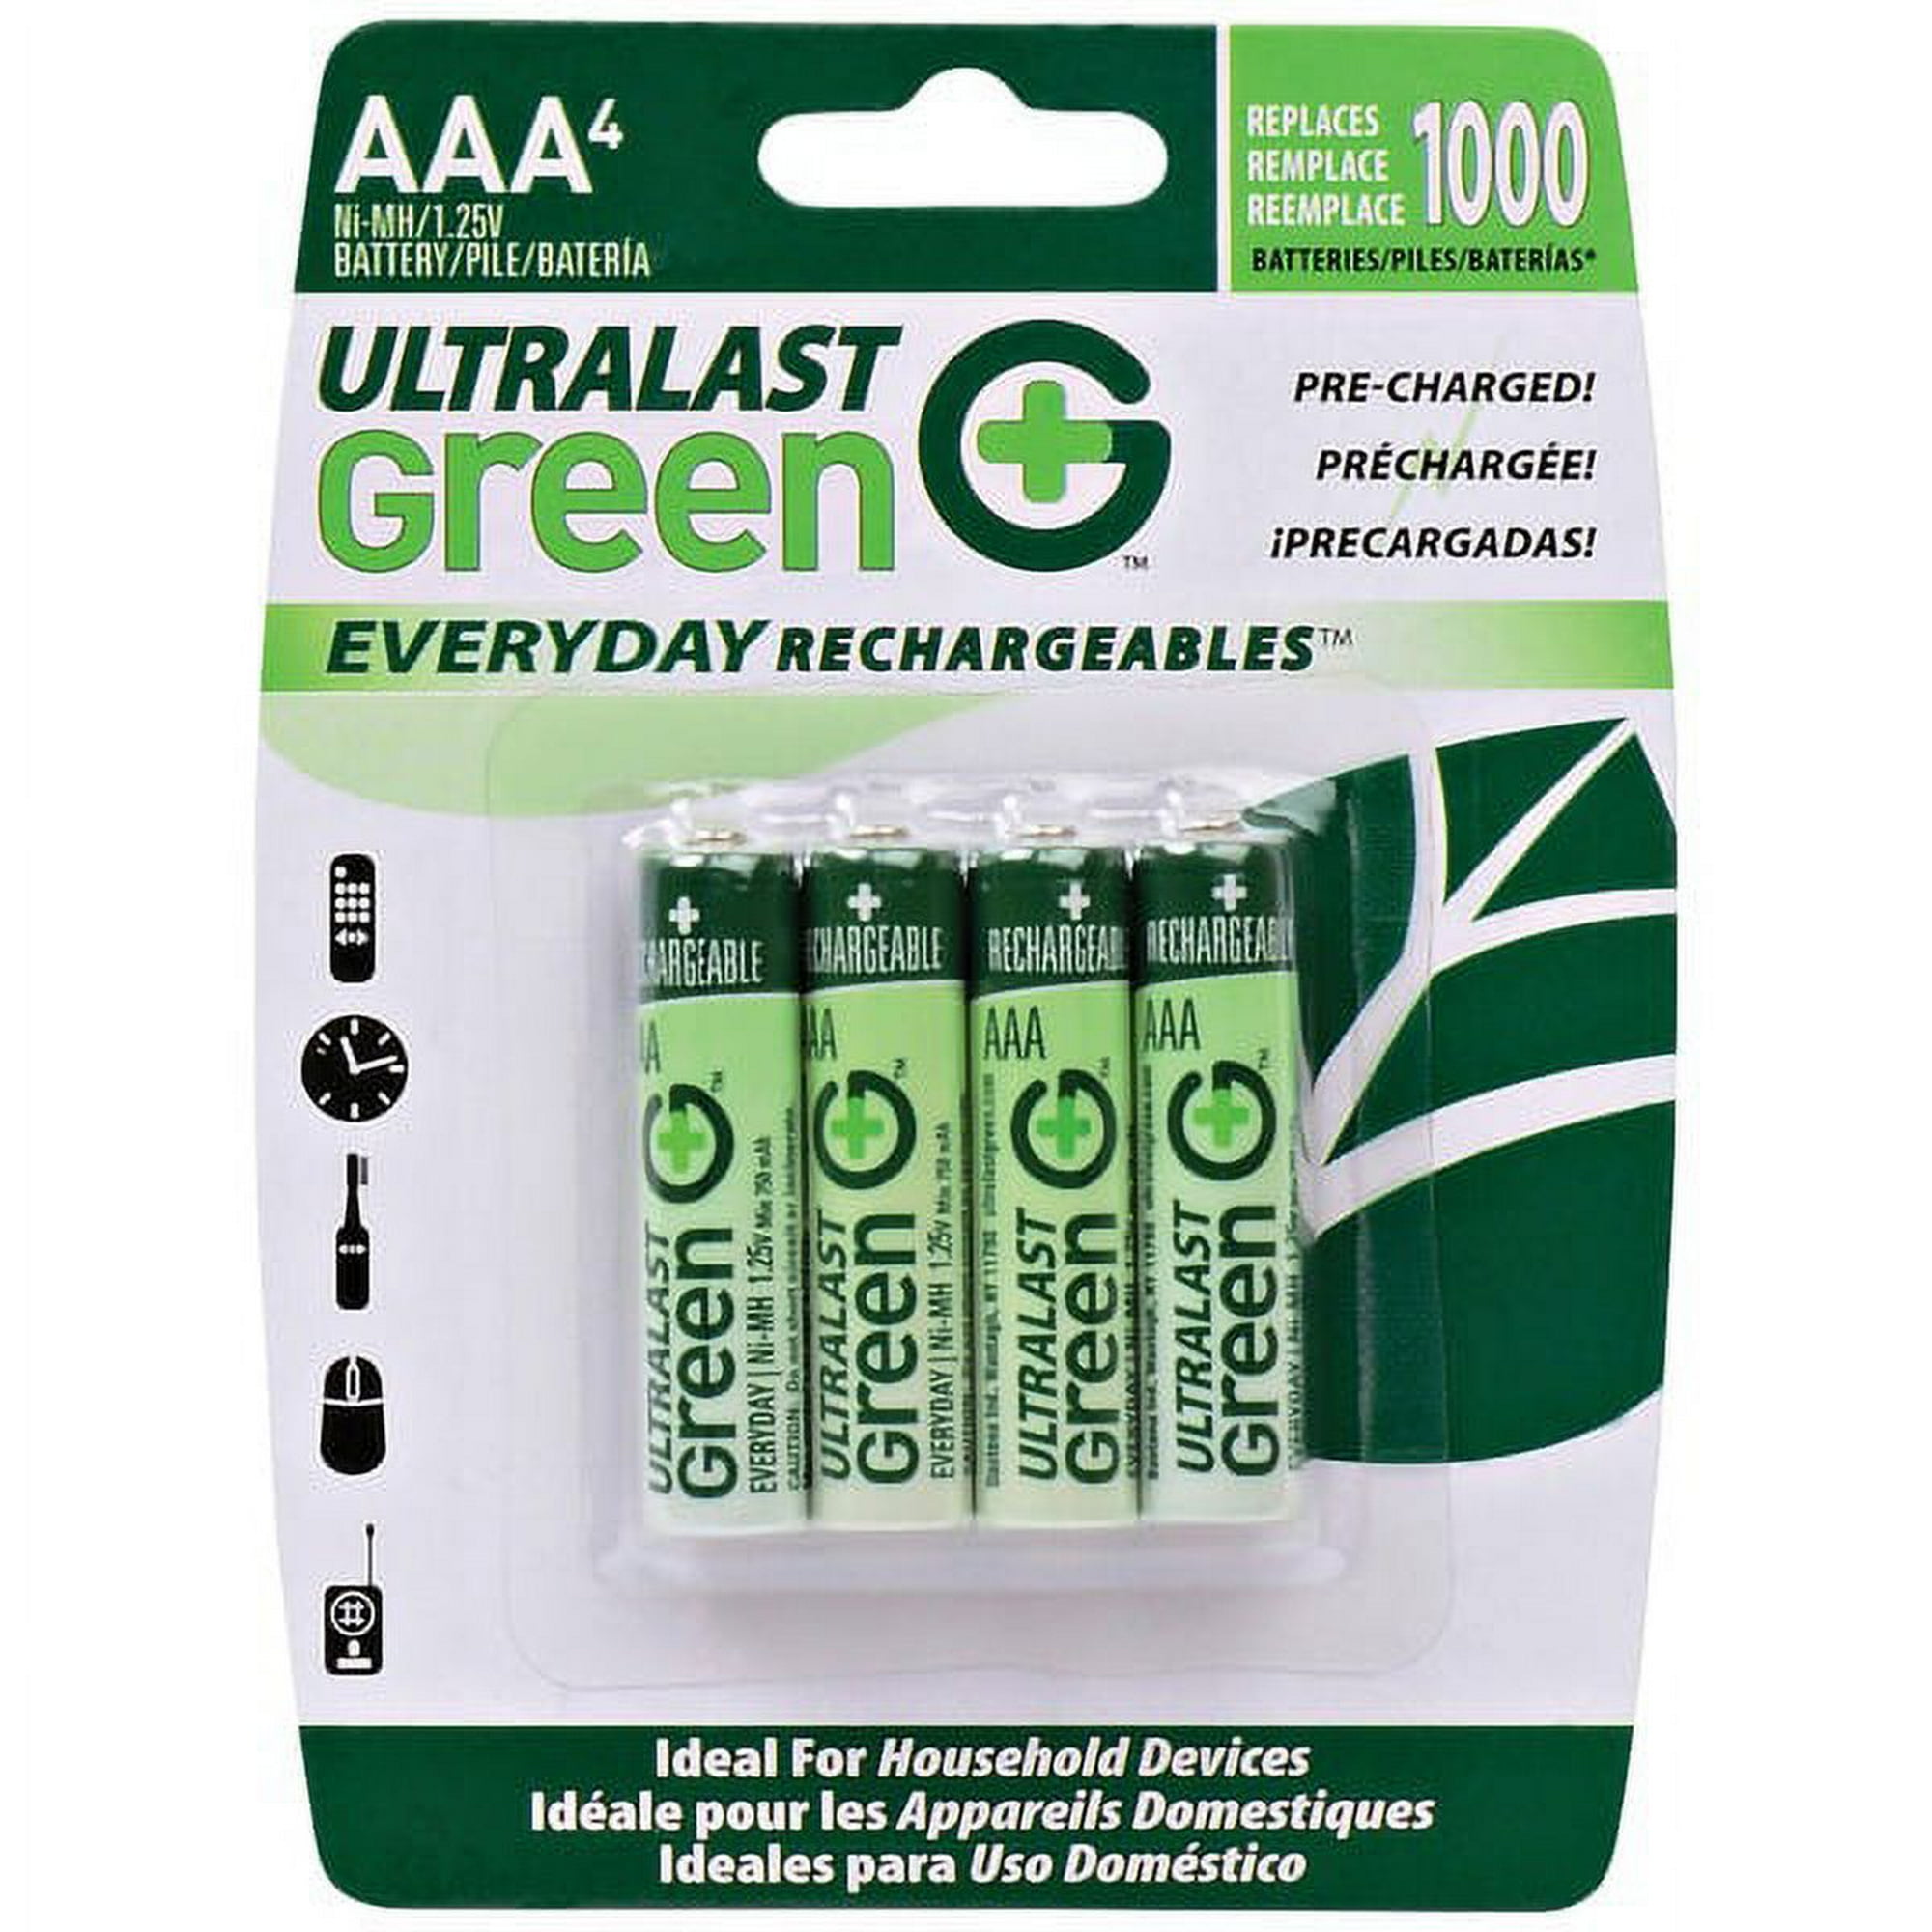 Ultralast ulged4aaa green everyday pilas recargables aaa nimh, paquete de 4